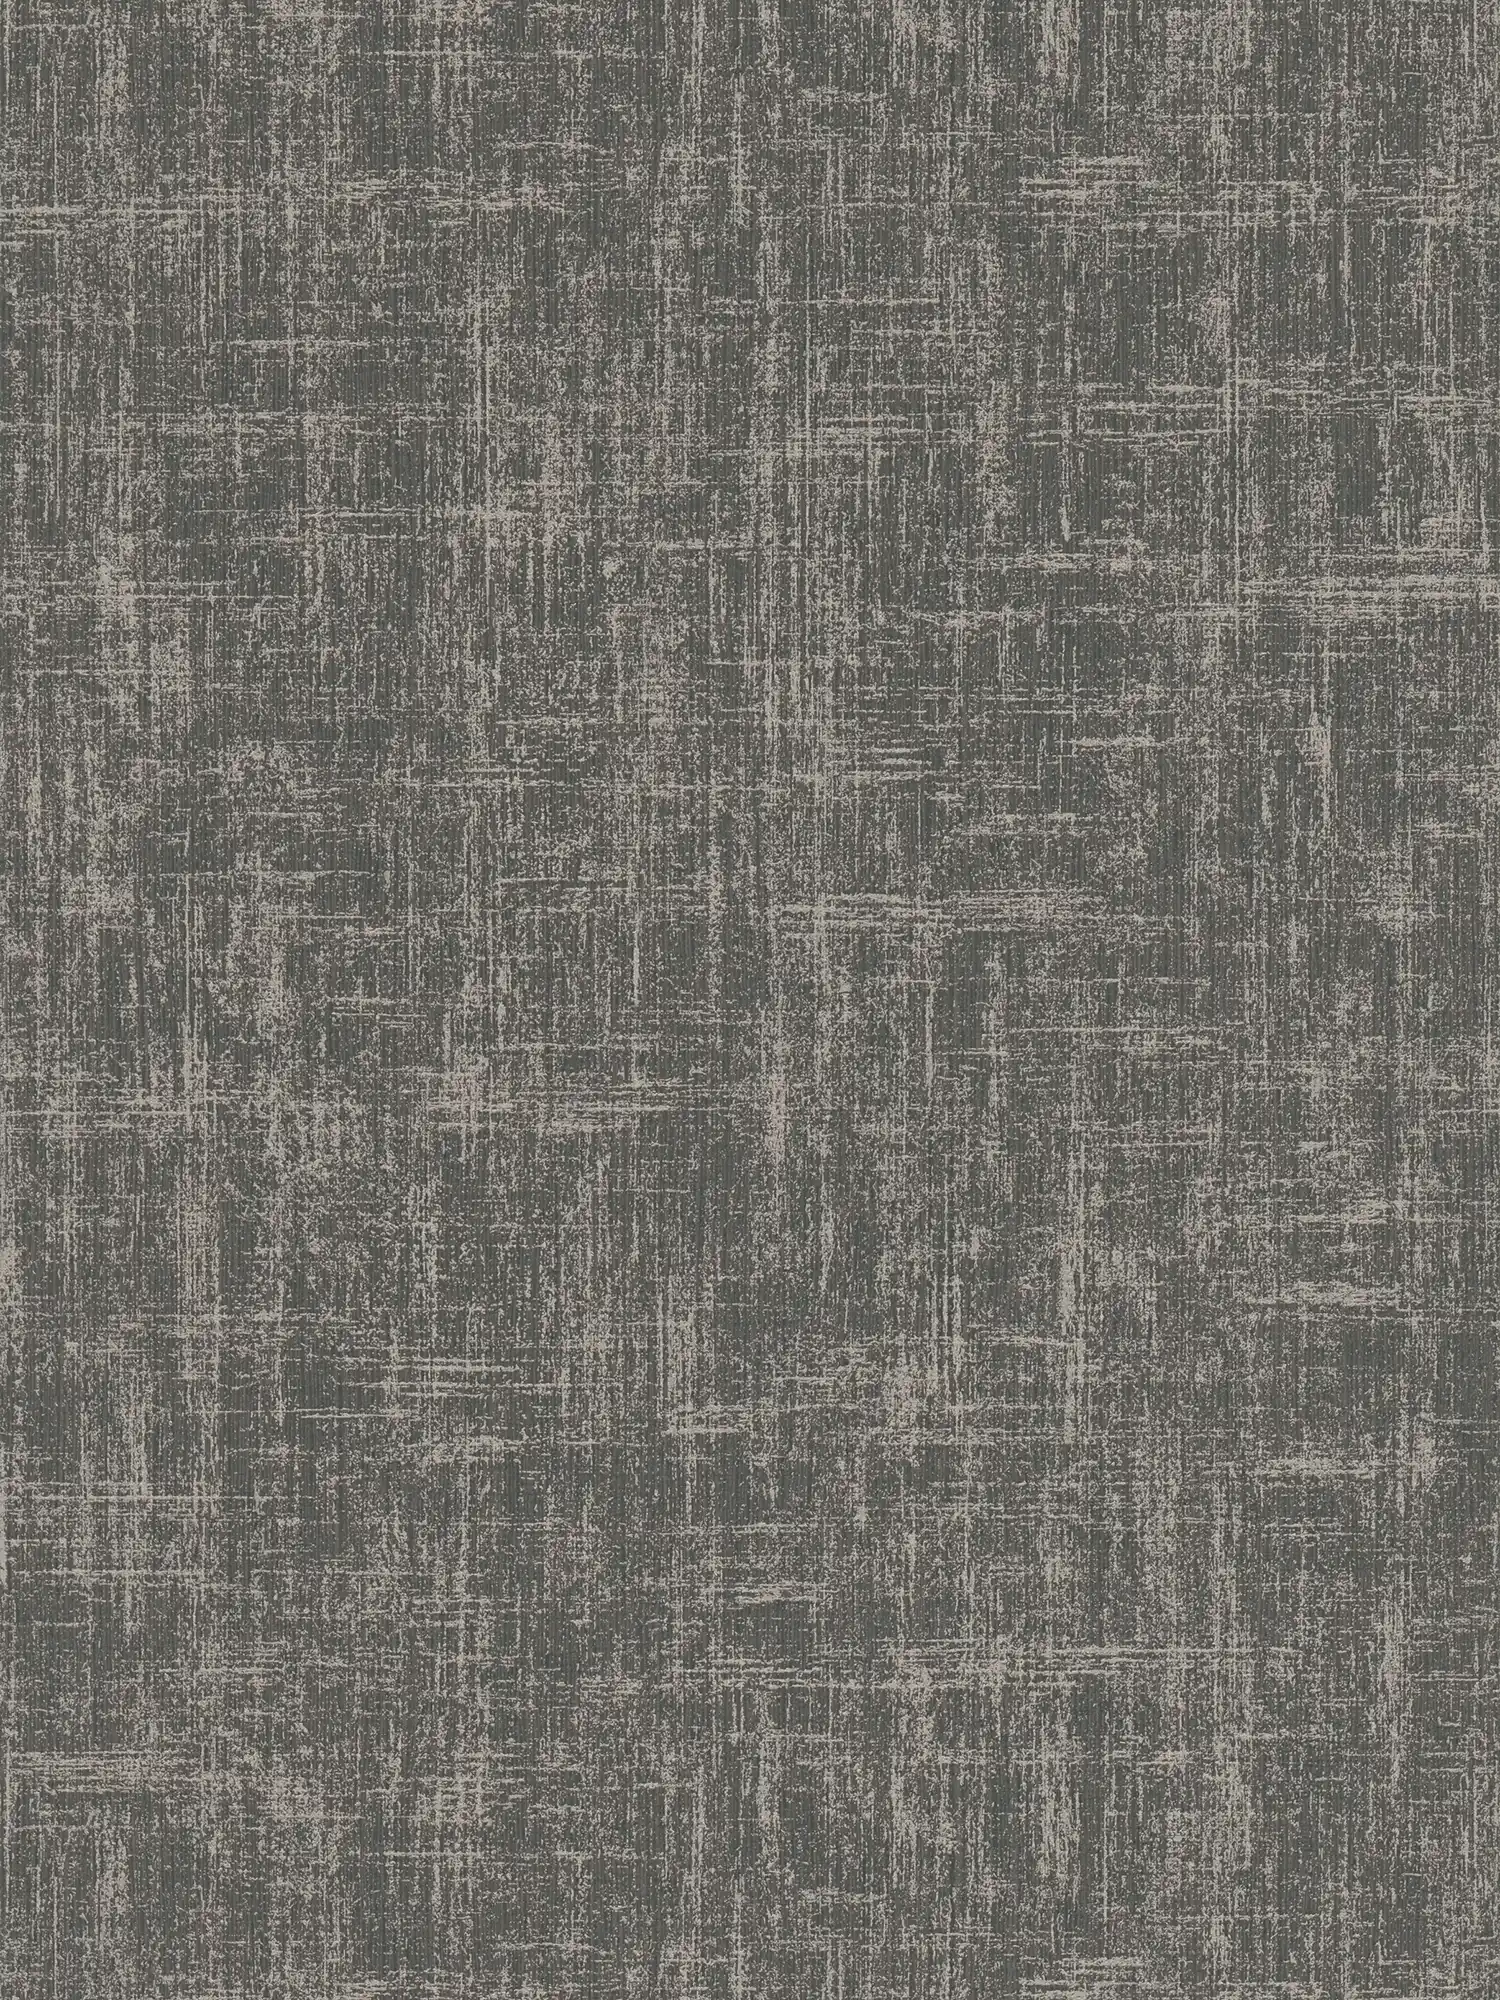 Non-woven wallpaper with mottled metallic effect - black, grey
